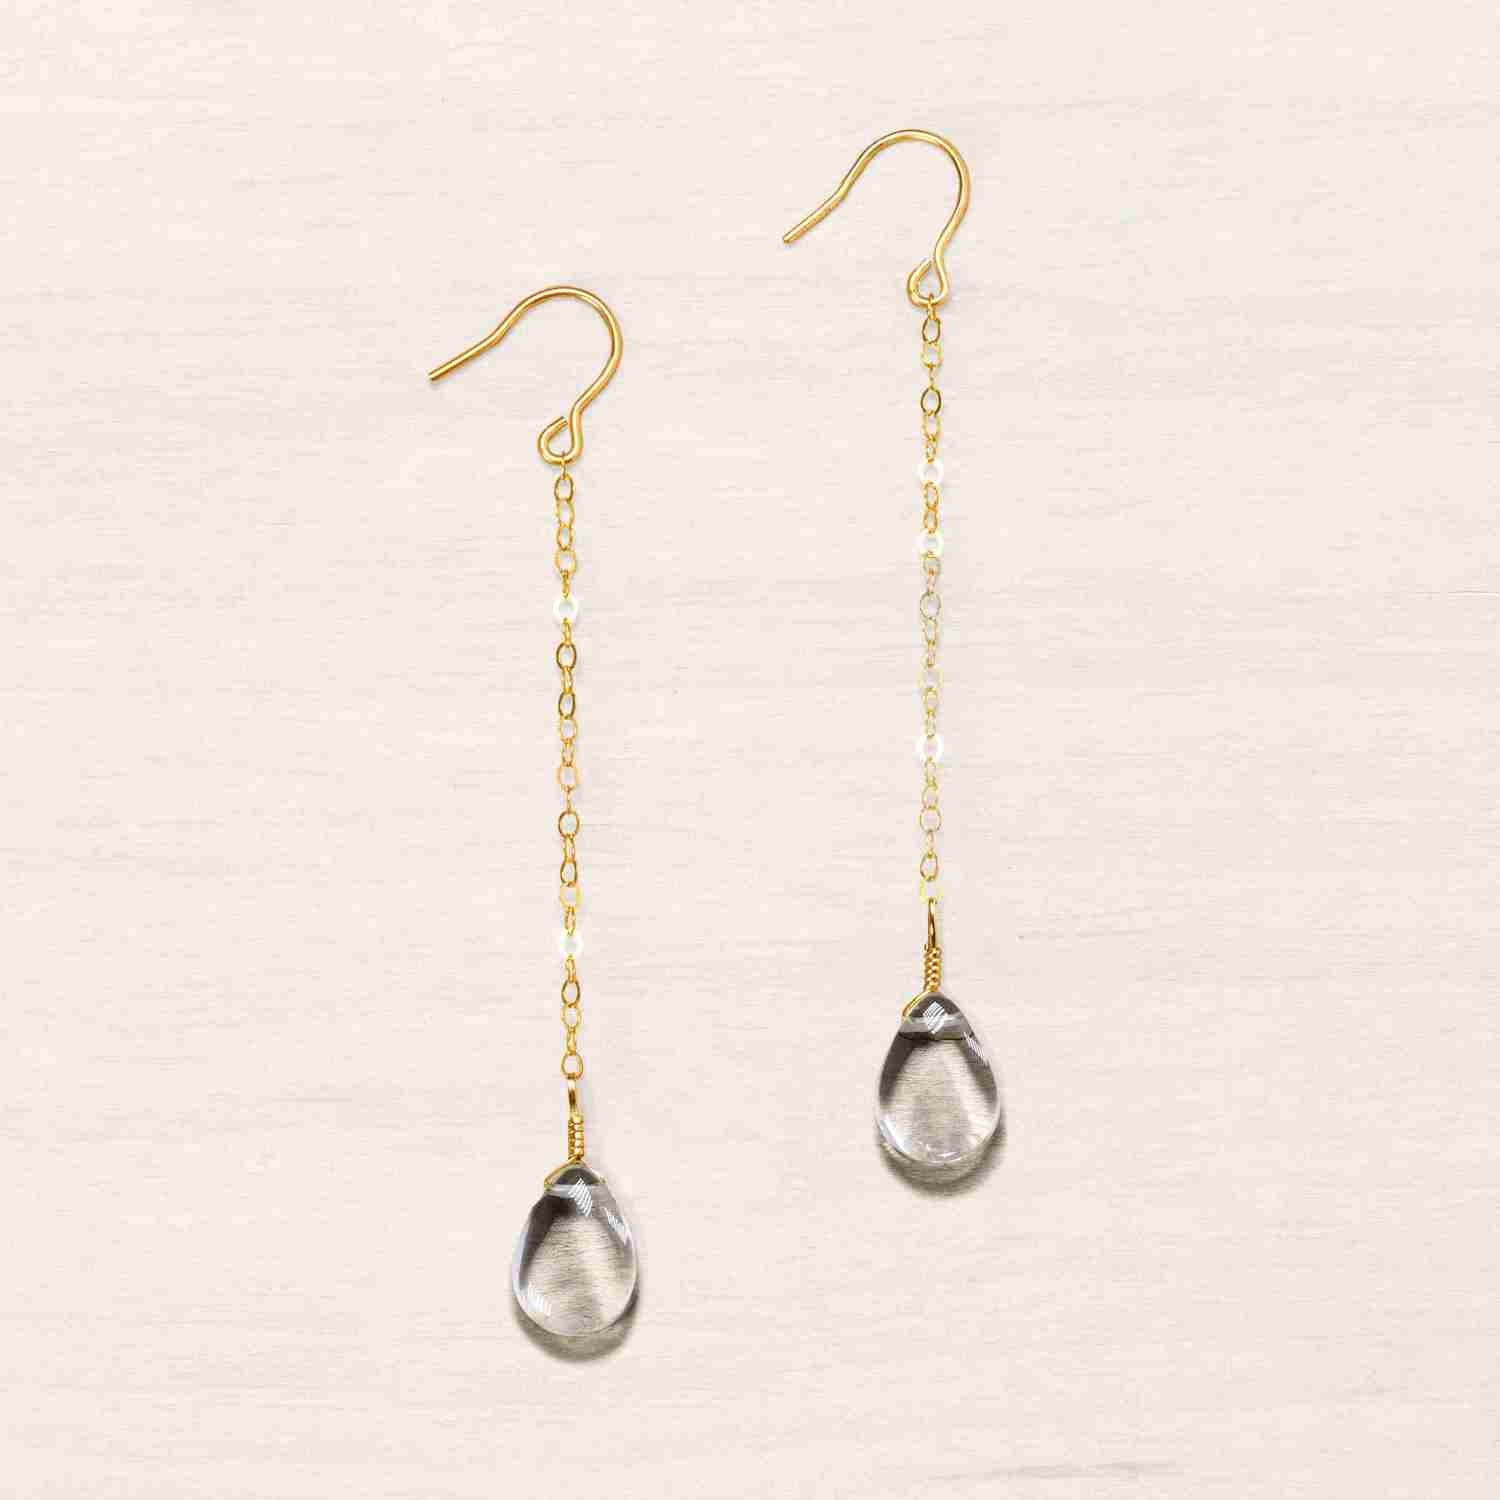 clear quartz gem jewels pendant earrings